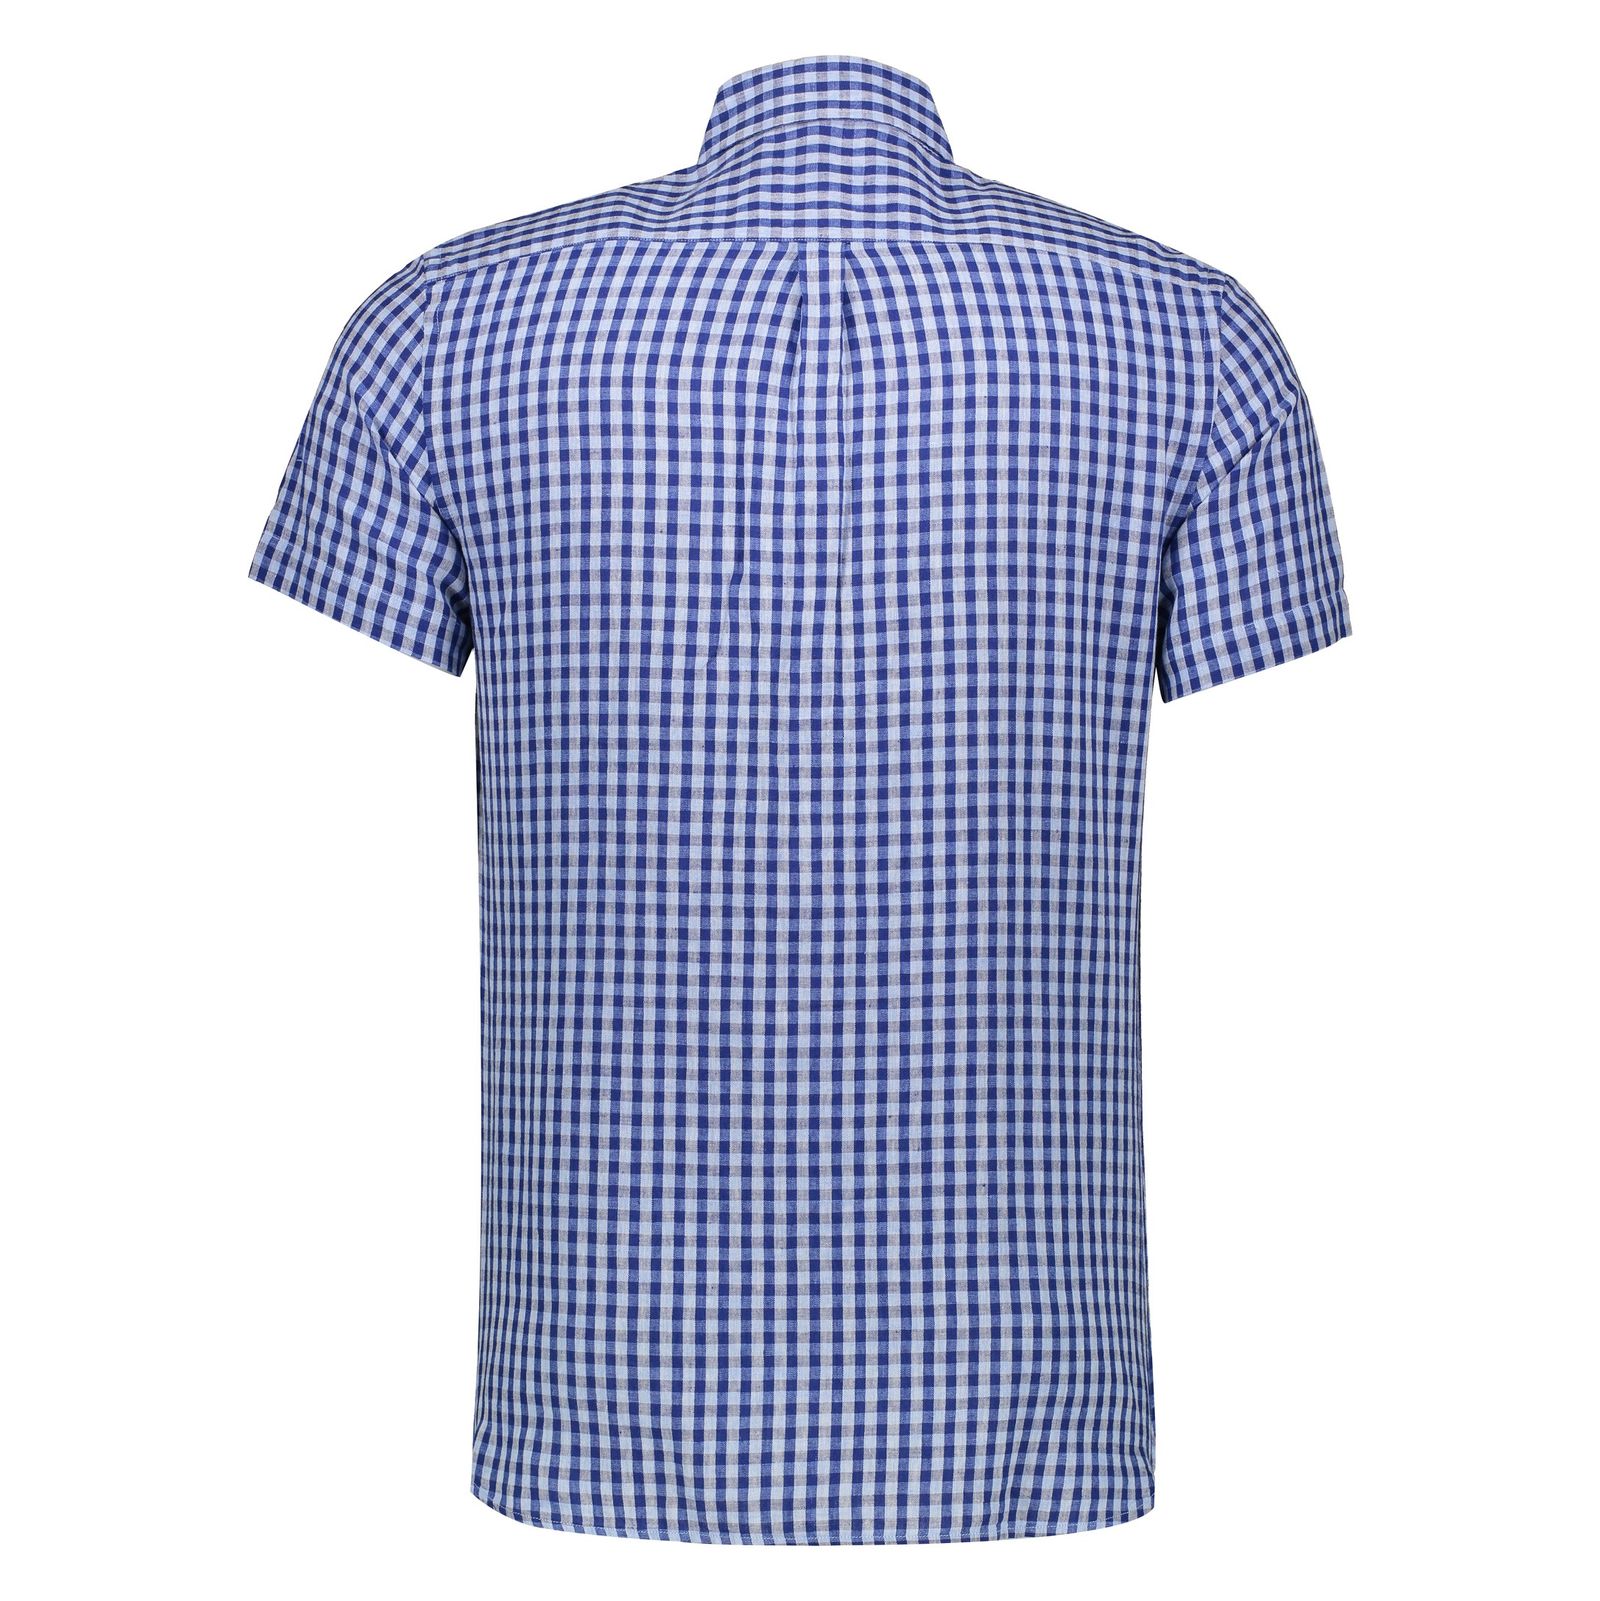 پیراهن مردانه کورتفیل مدل 7549253-10 - آبی تیره - 3